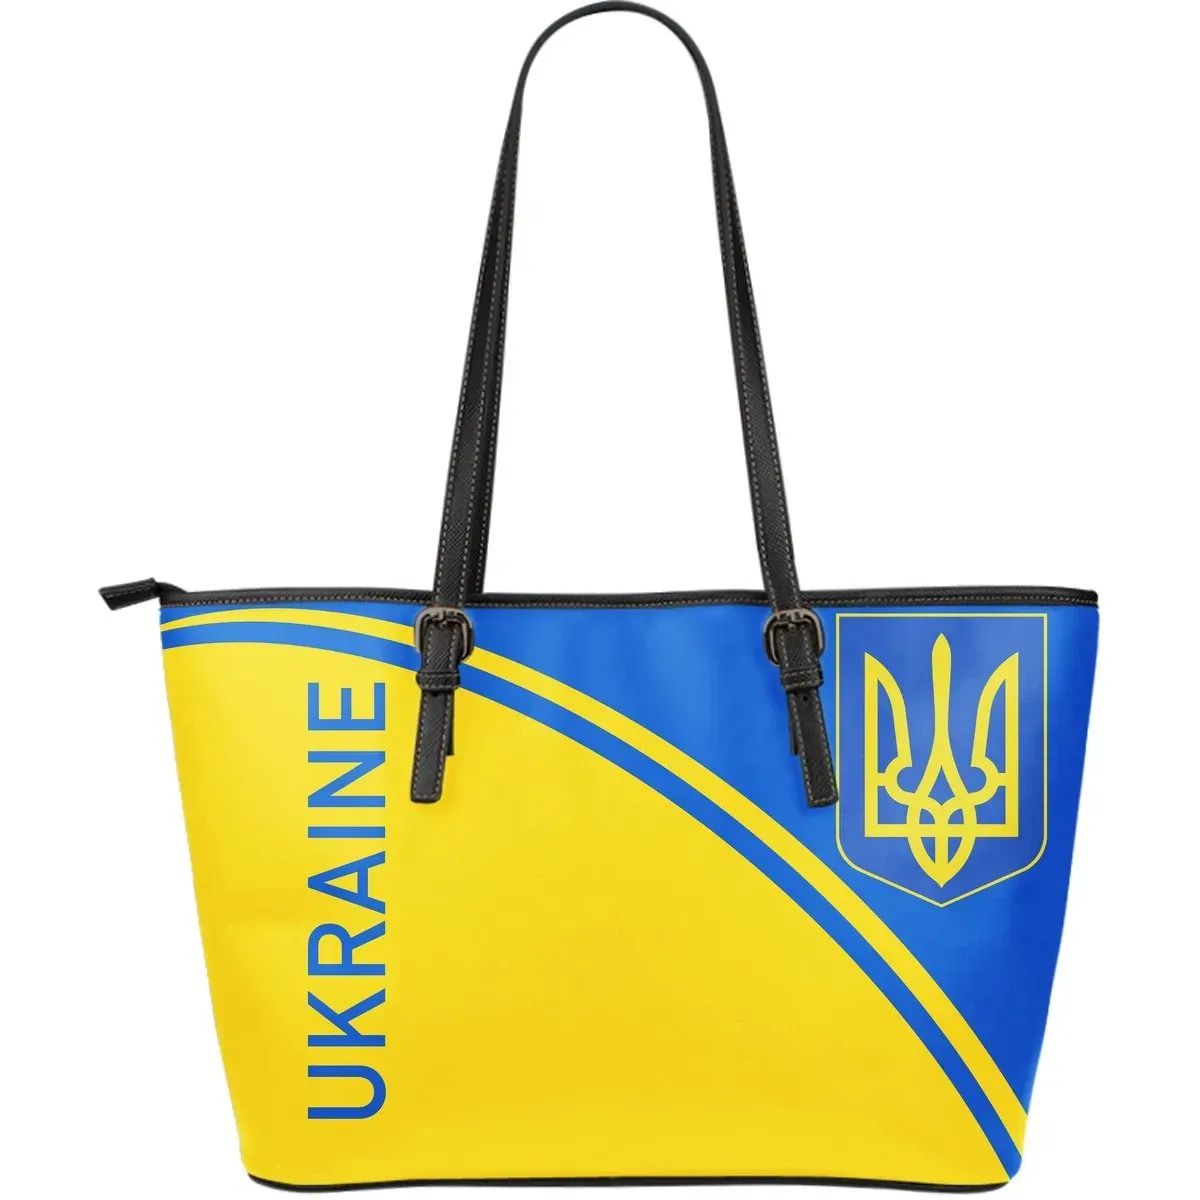 ukraine-leather-tote-bag-curve-version